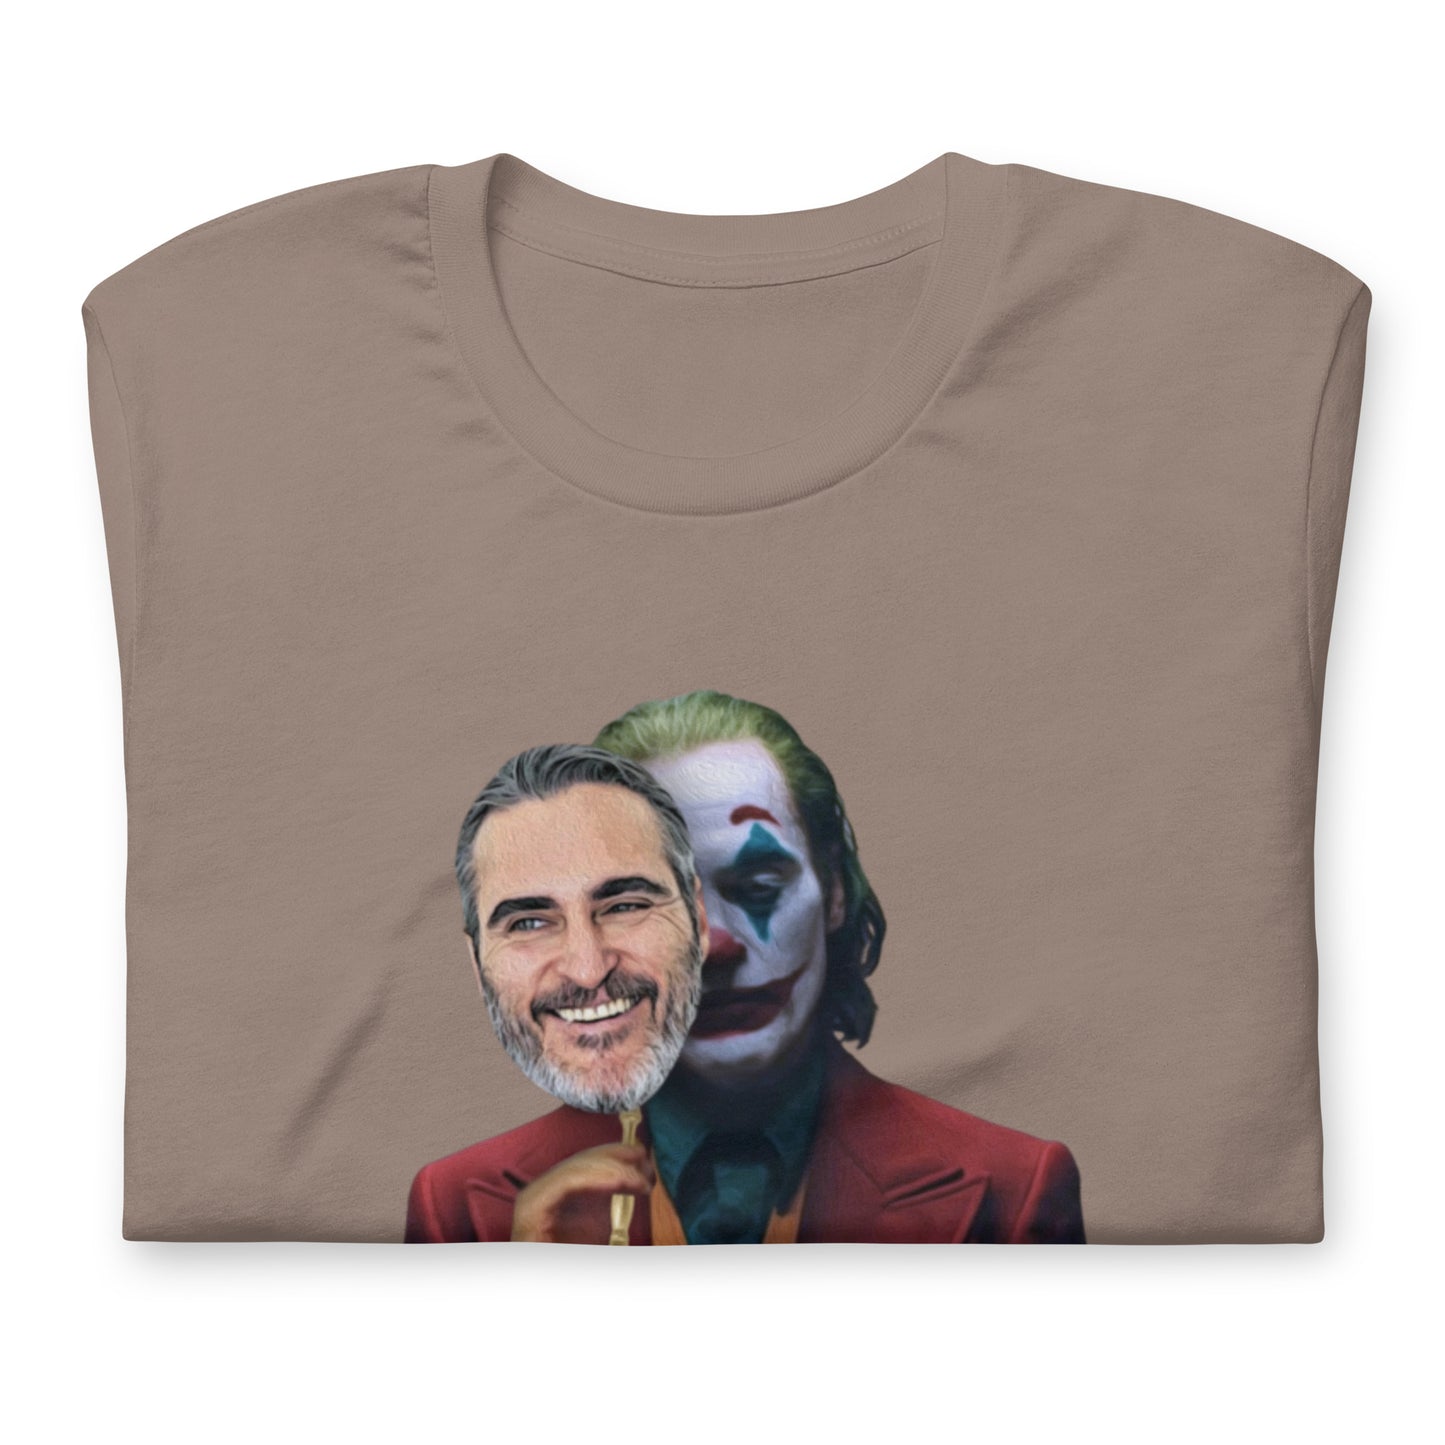 Joaquin Phoenix Mask KiSS Unisex t-shirt - Joker Folie à Deux